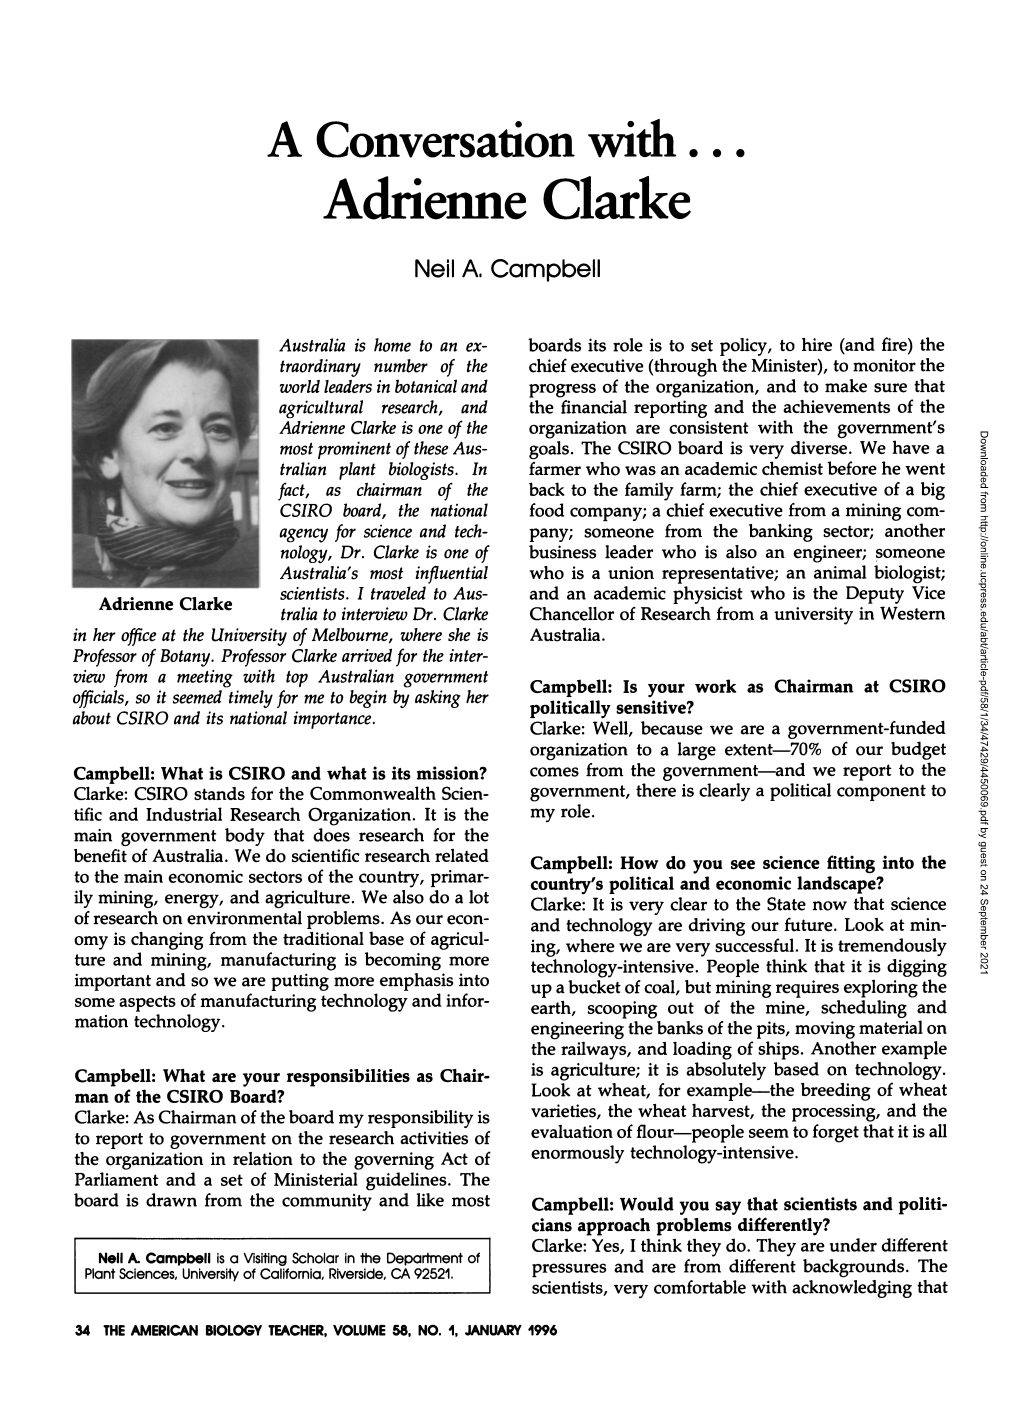 A Conversation With... Adrienne Clarke